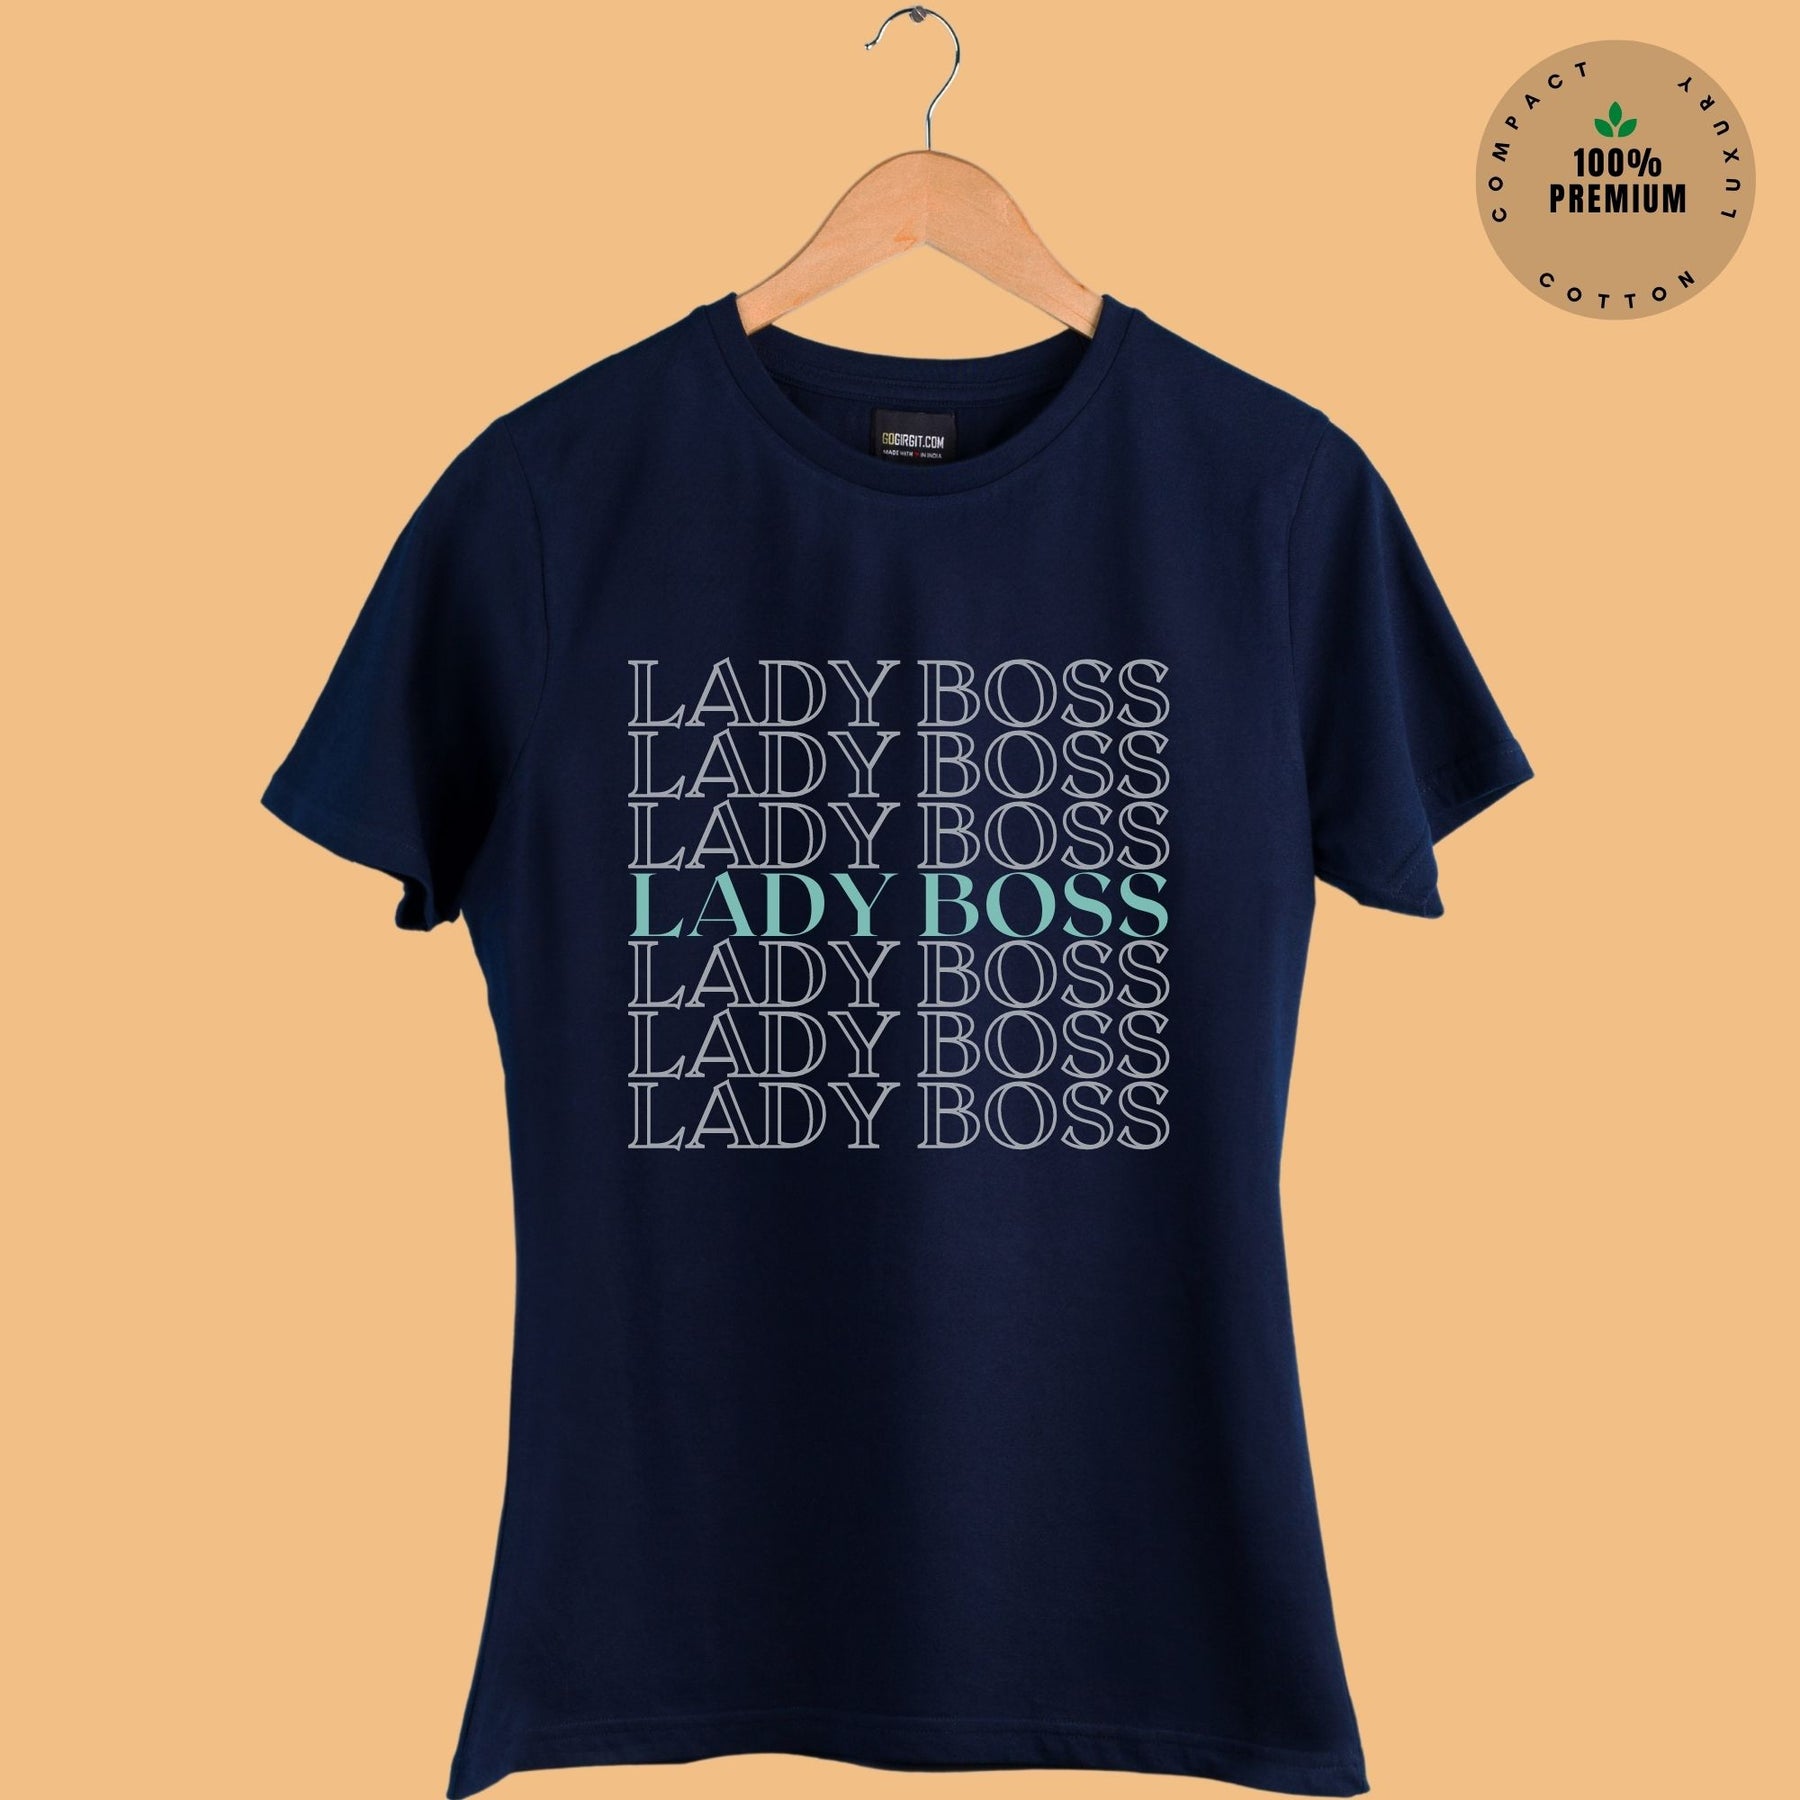 Printed-premium-cotton-women-s-round-neck-lady-boss-navy-blue-half-sleeve-t-shirt-gogirgit